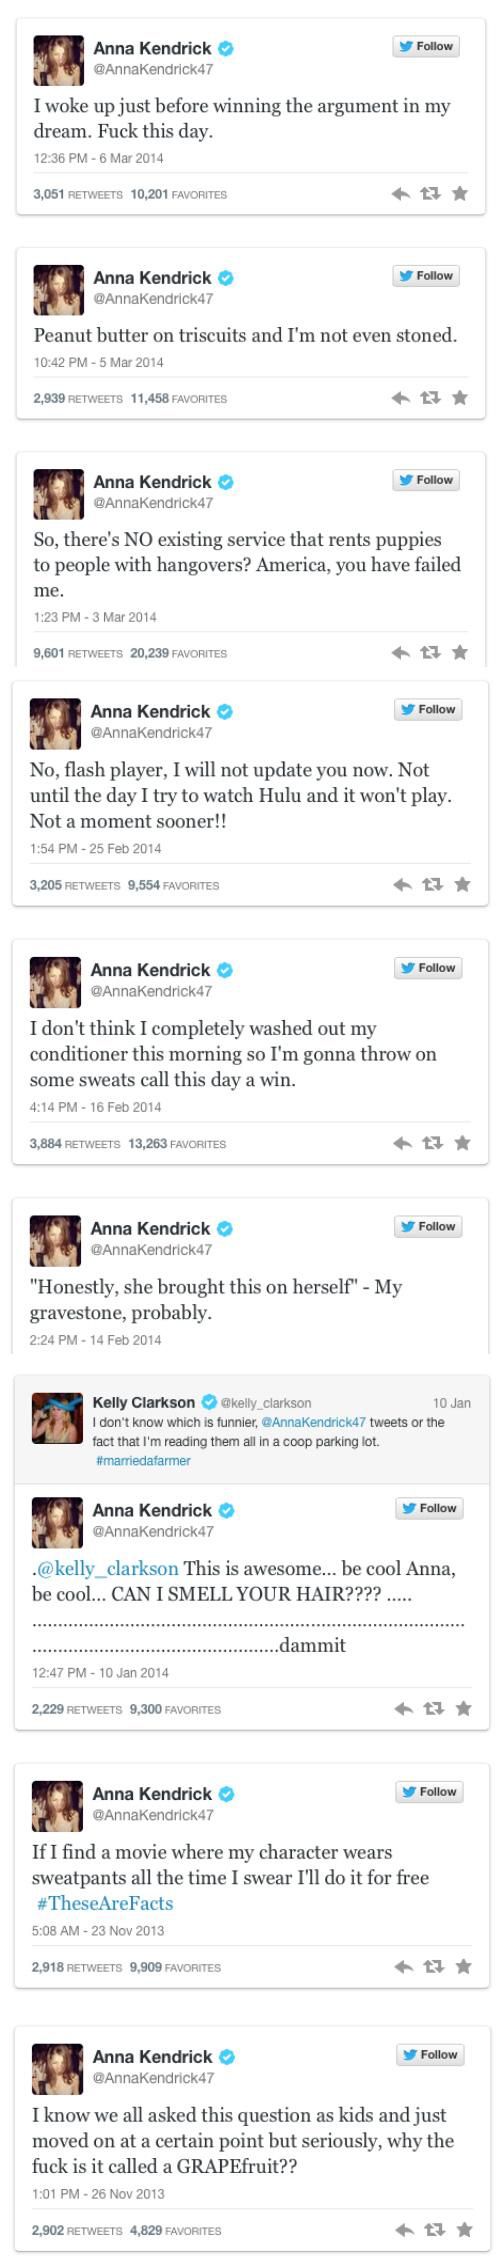 More Anna Kendrick Tweets